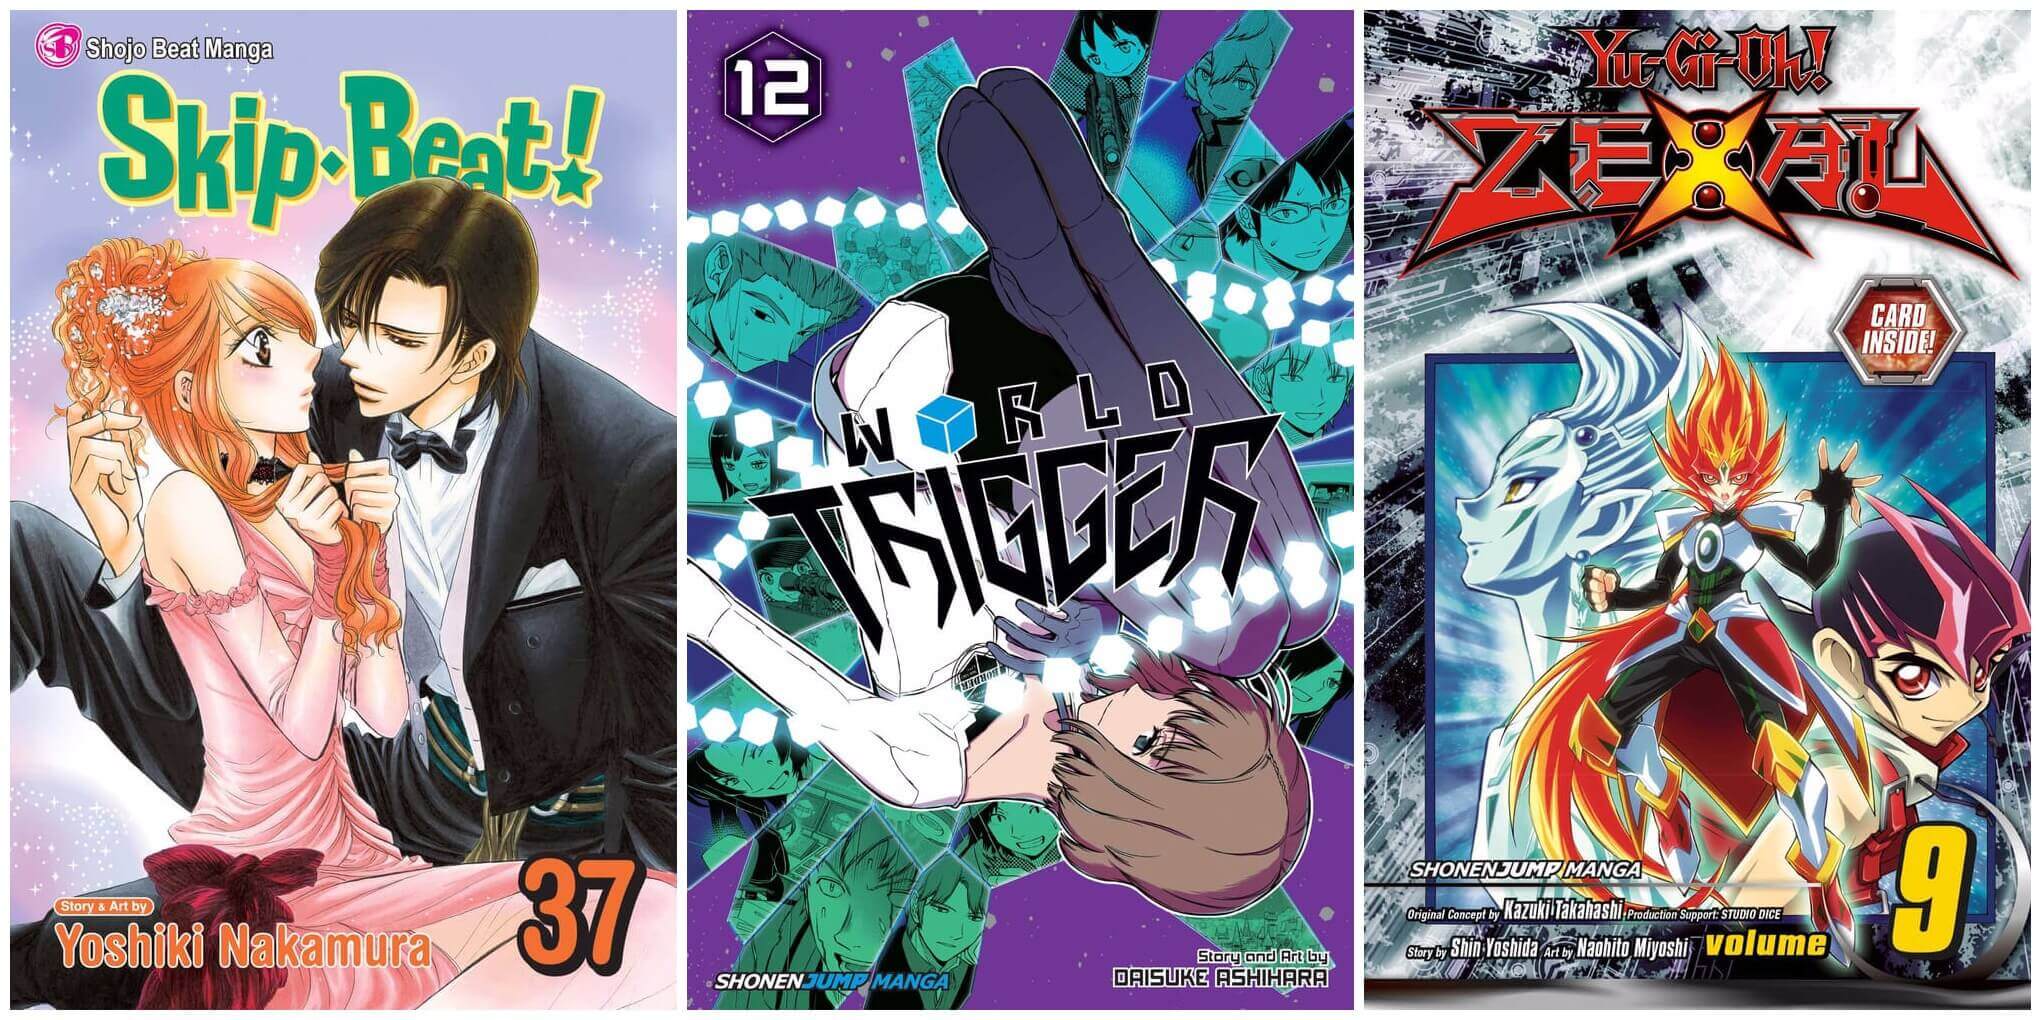 September 2016 Manga Releases Covers for Skip Beat!, World Trigger, and YuGiOh Zexal.